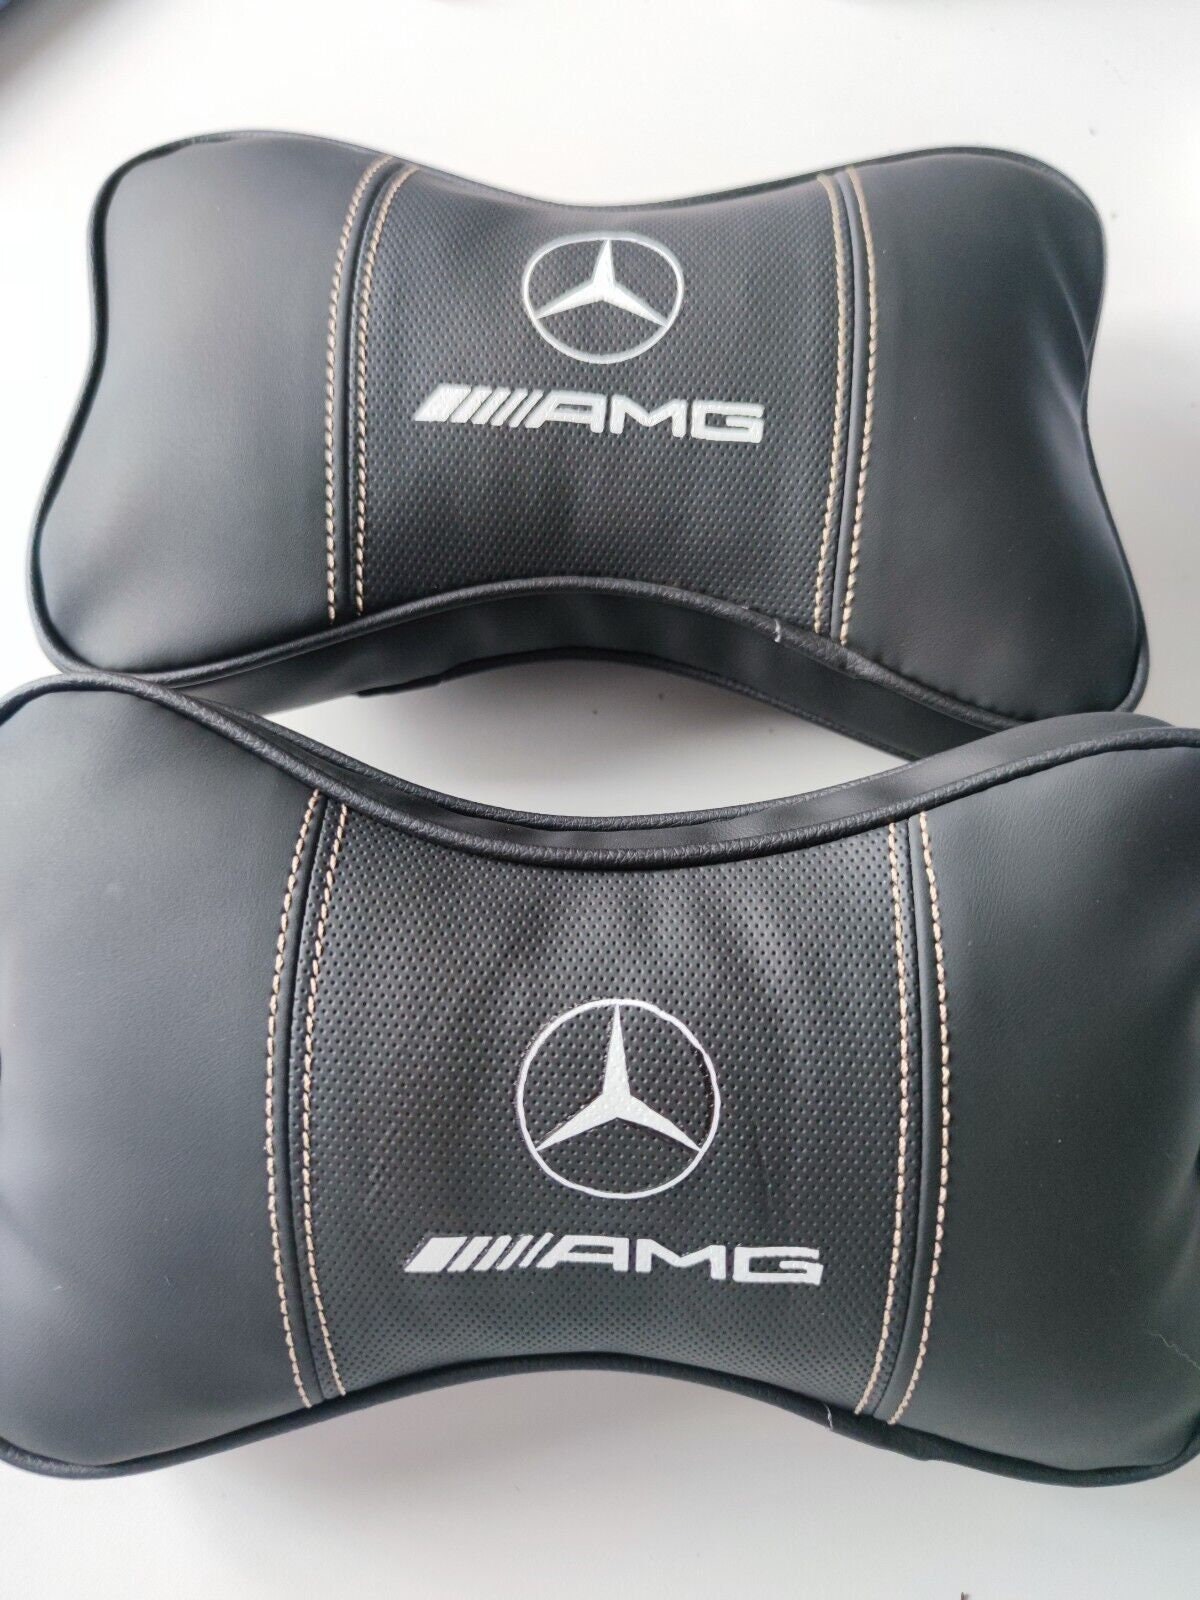 For Mercedes W204 W203 design S class car headrest neck cushion seat ski 